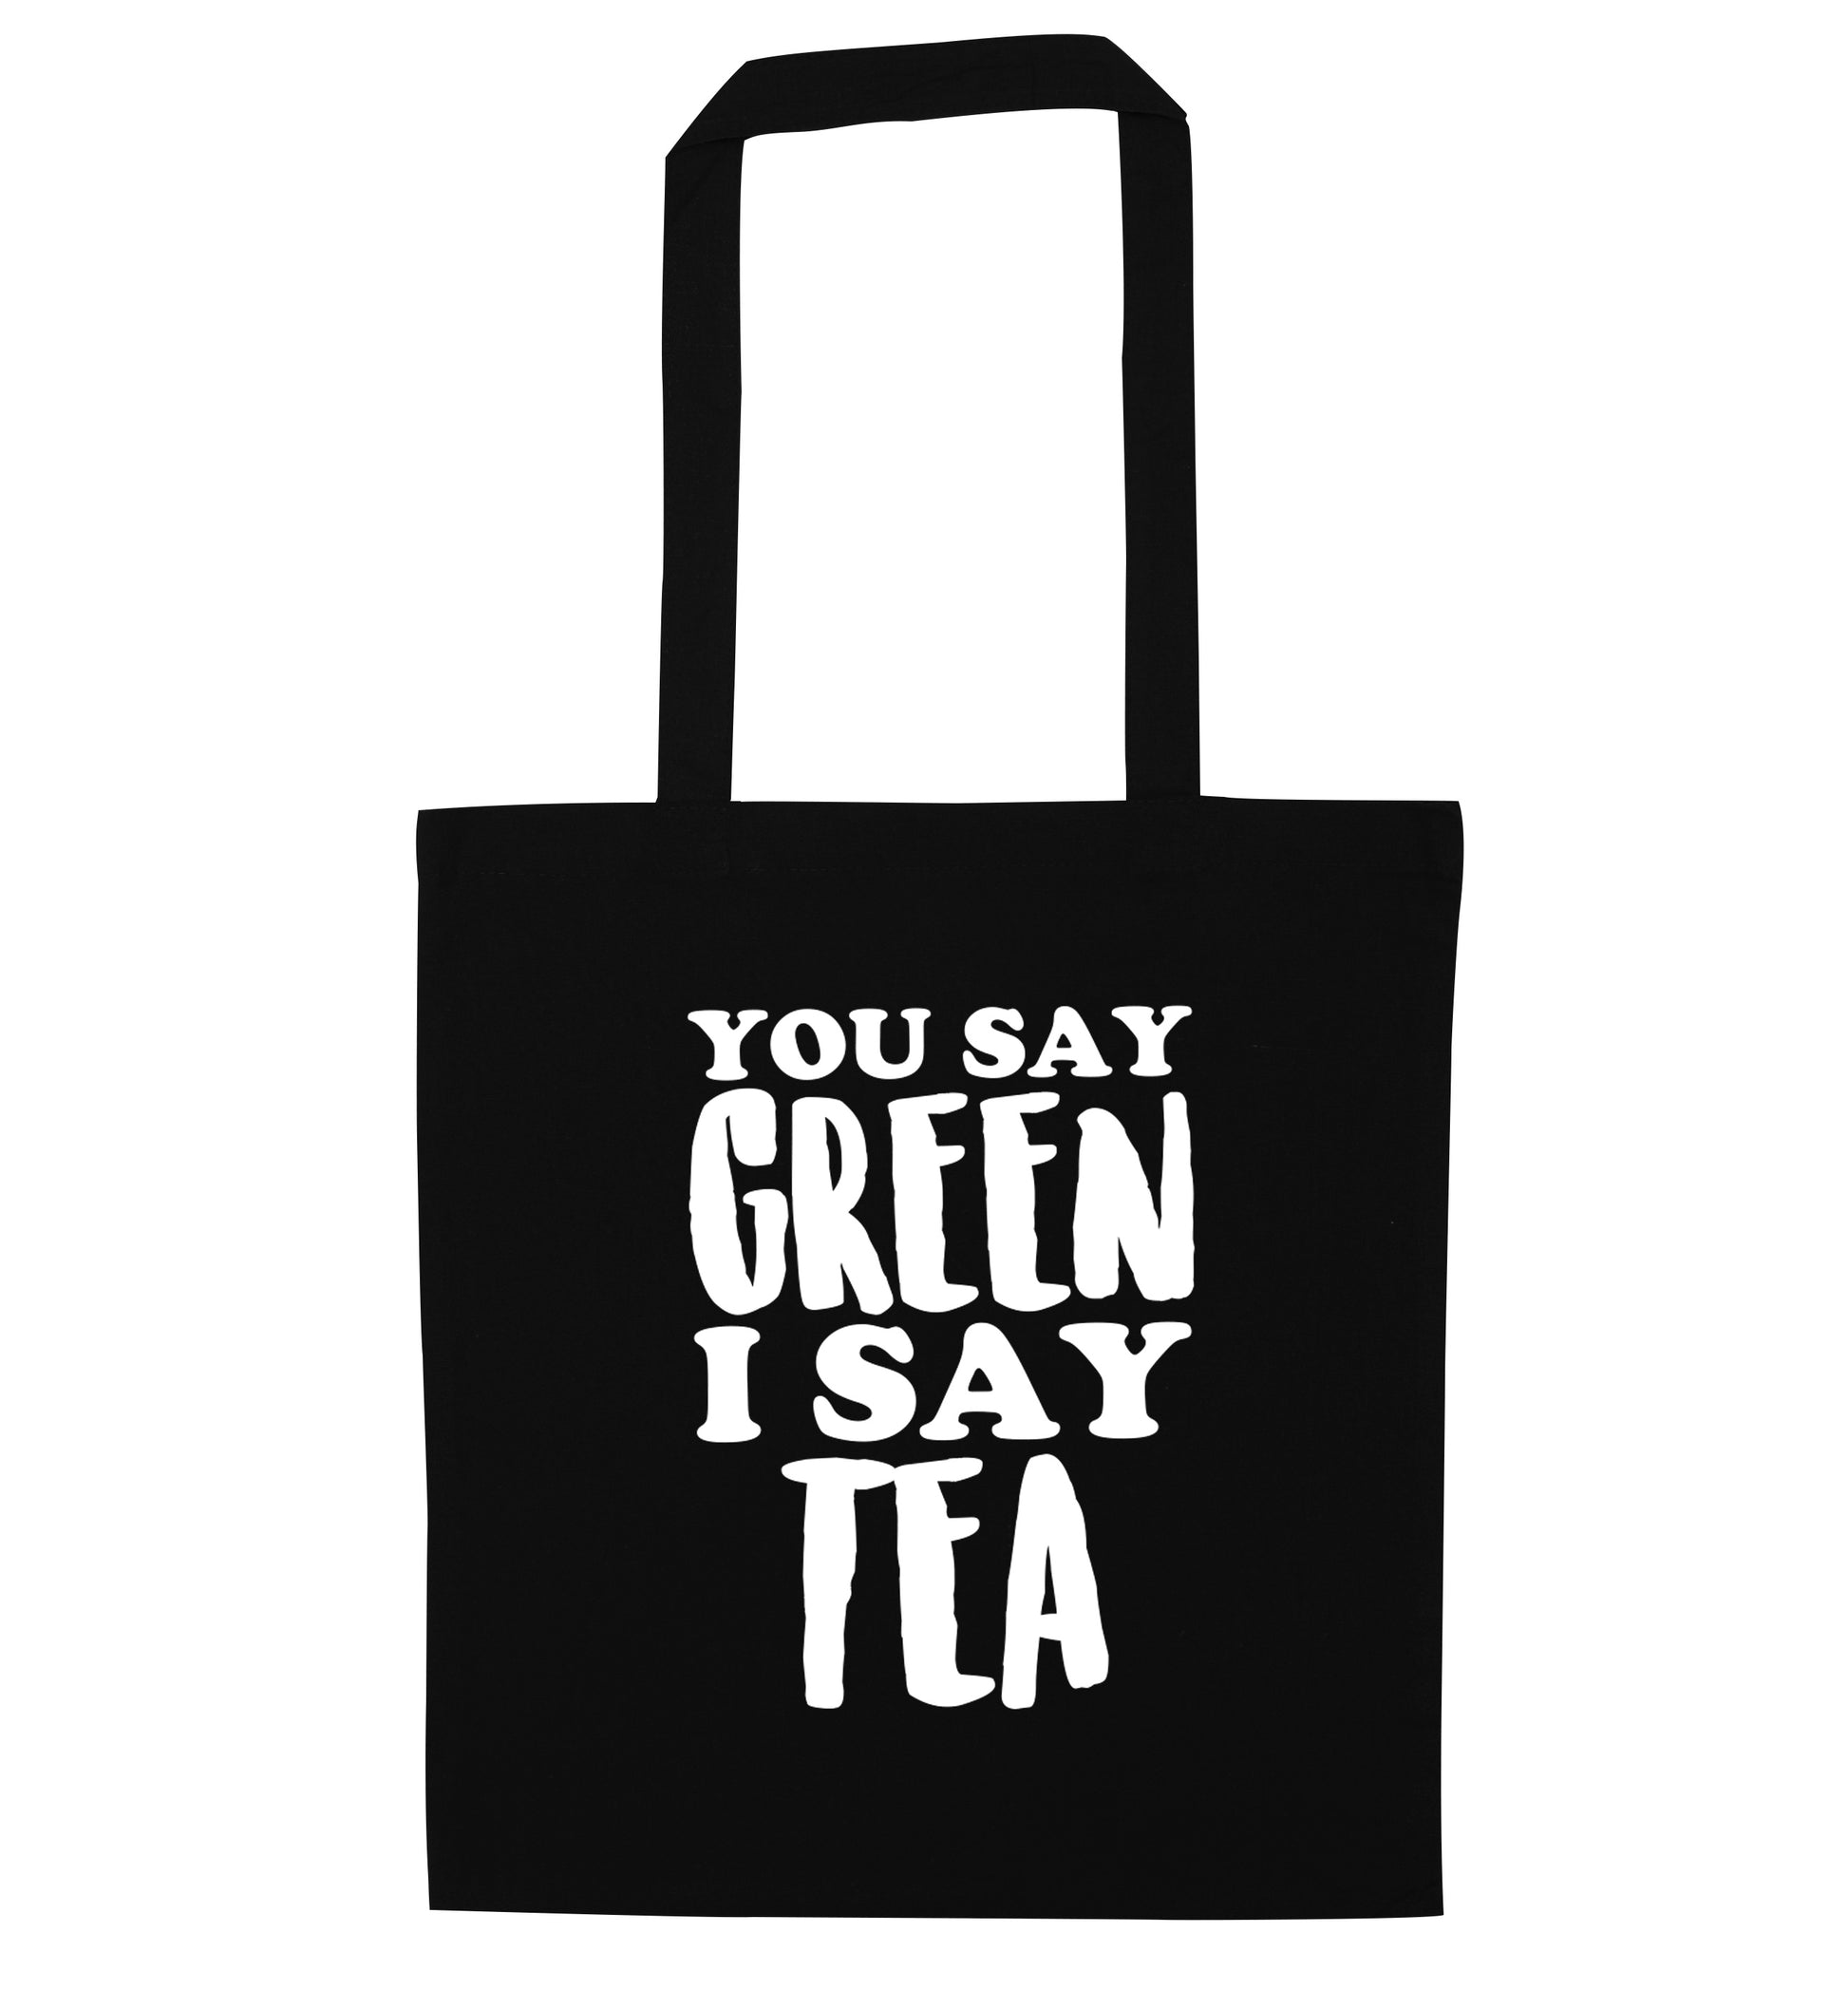 You say green I say tea! black tote bag